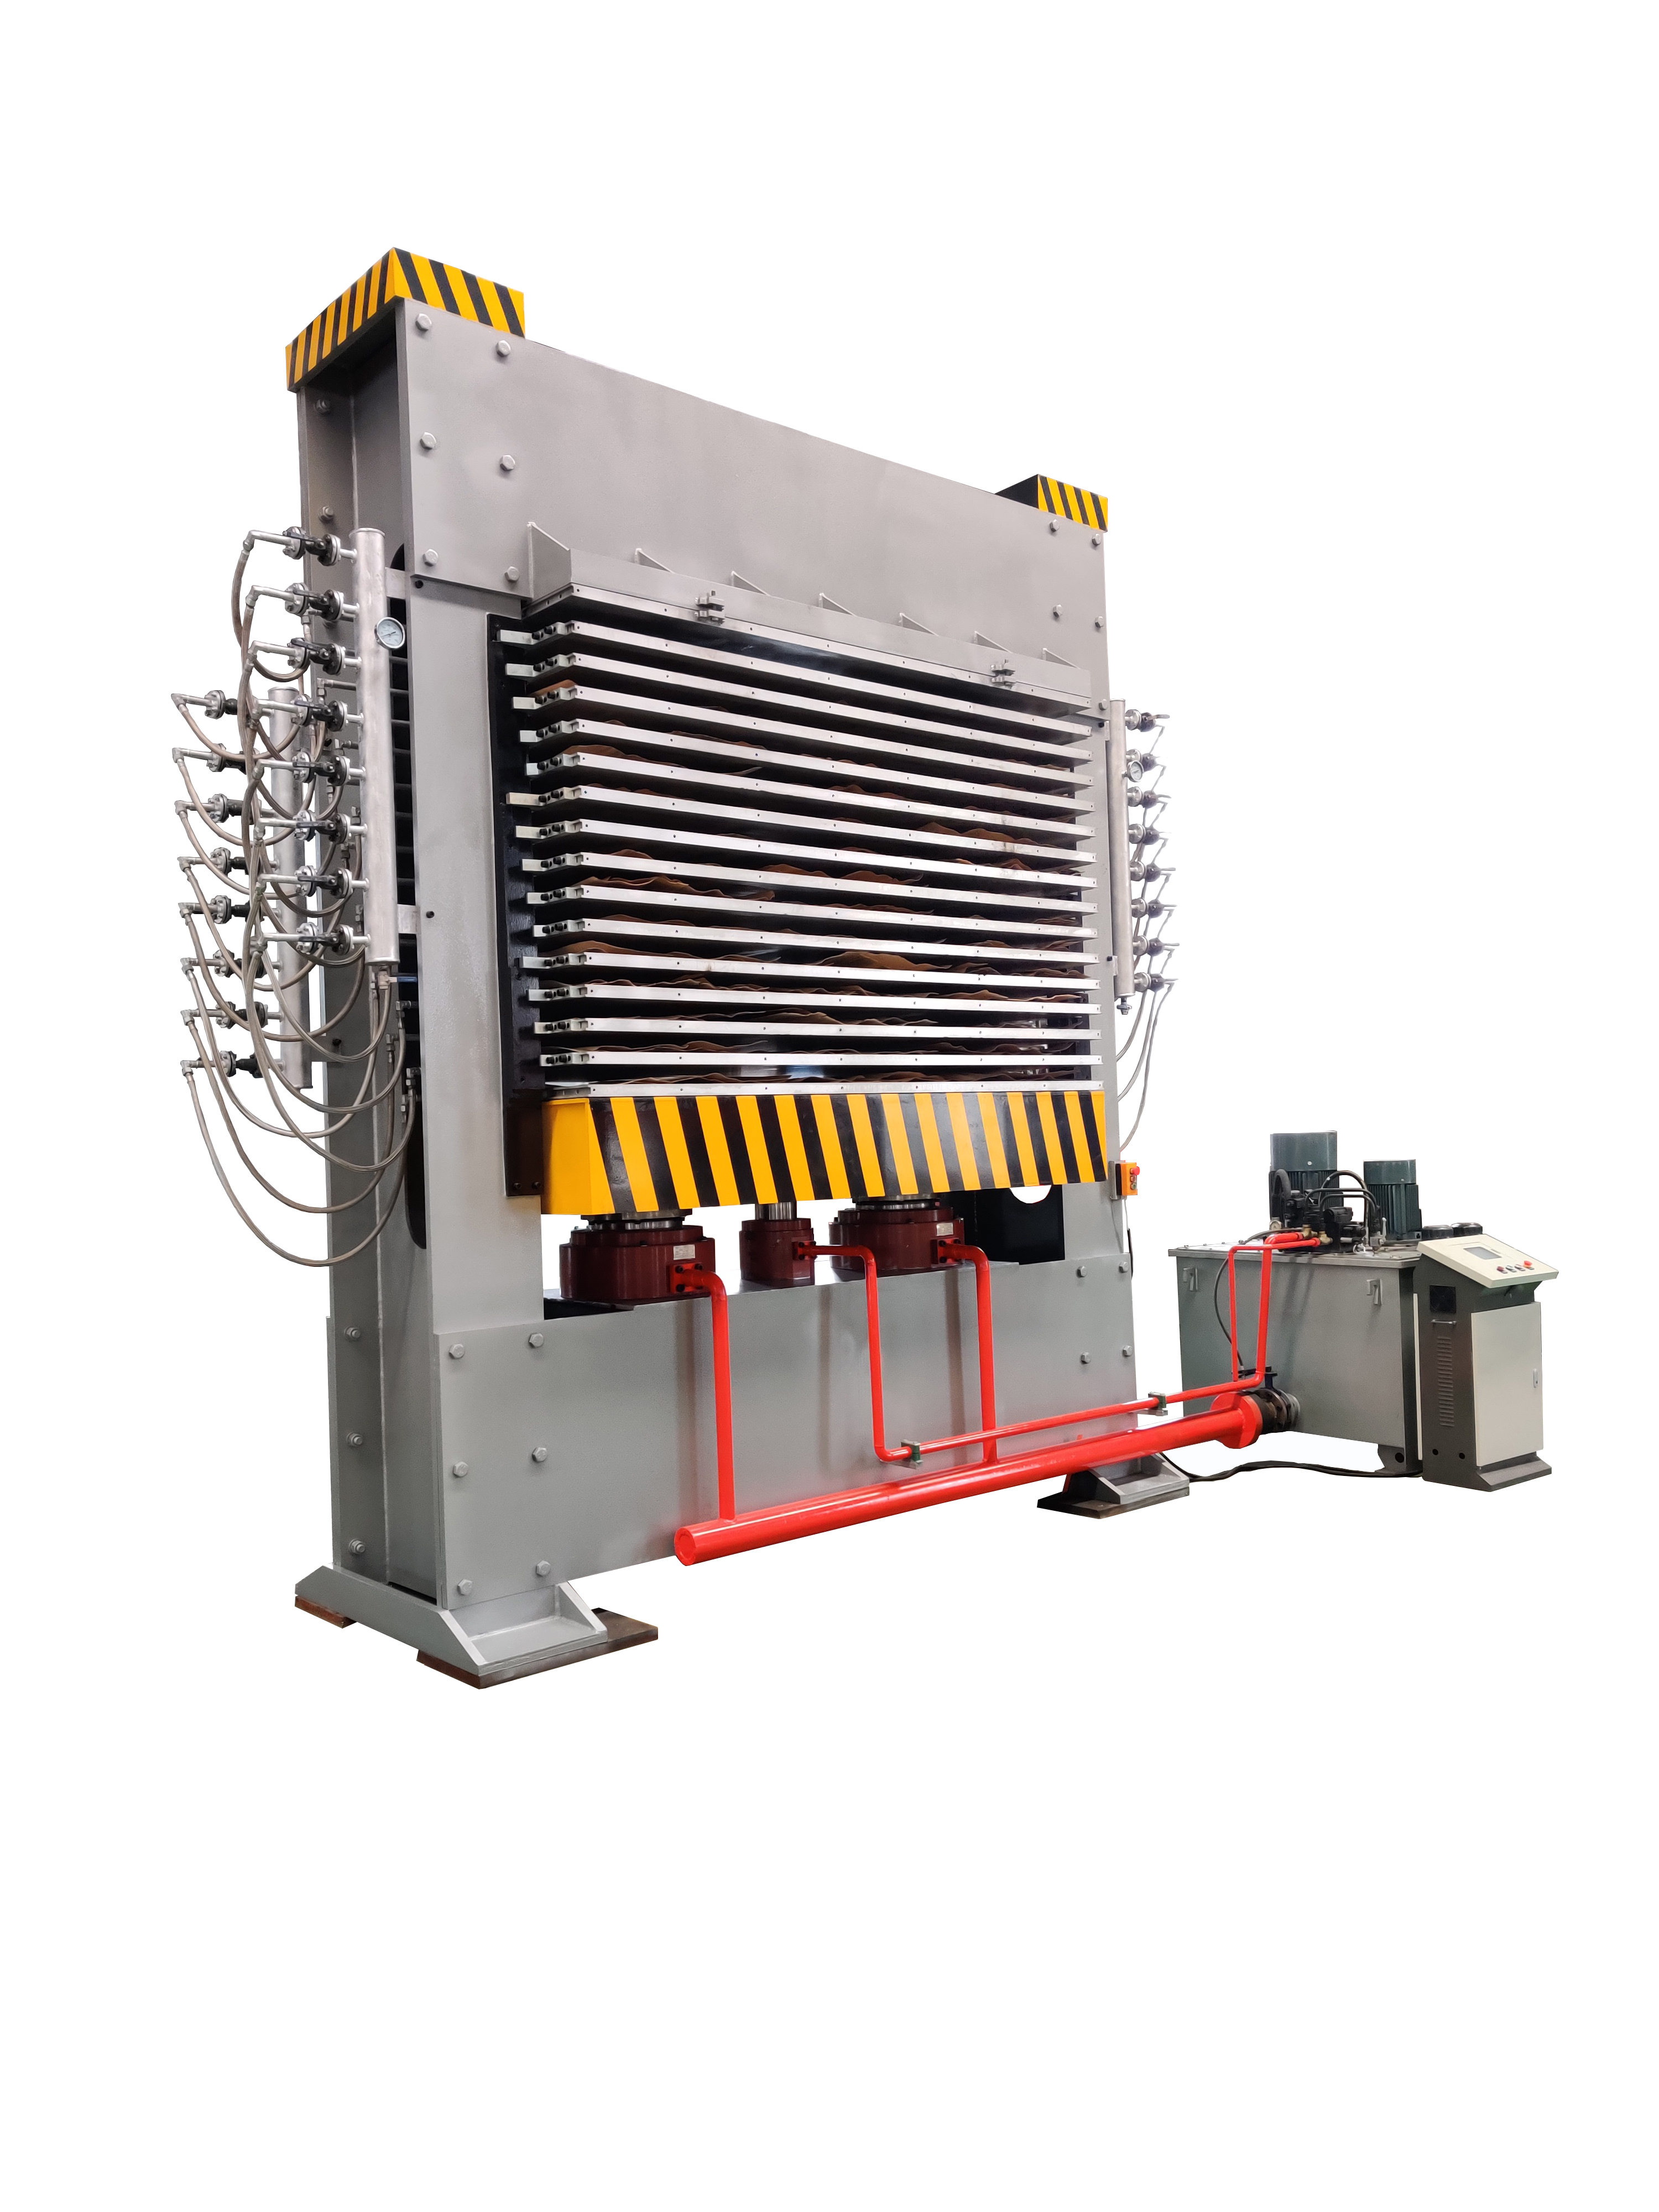 500T hydraulic hot press machine for plywood making machine